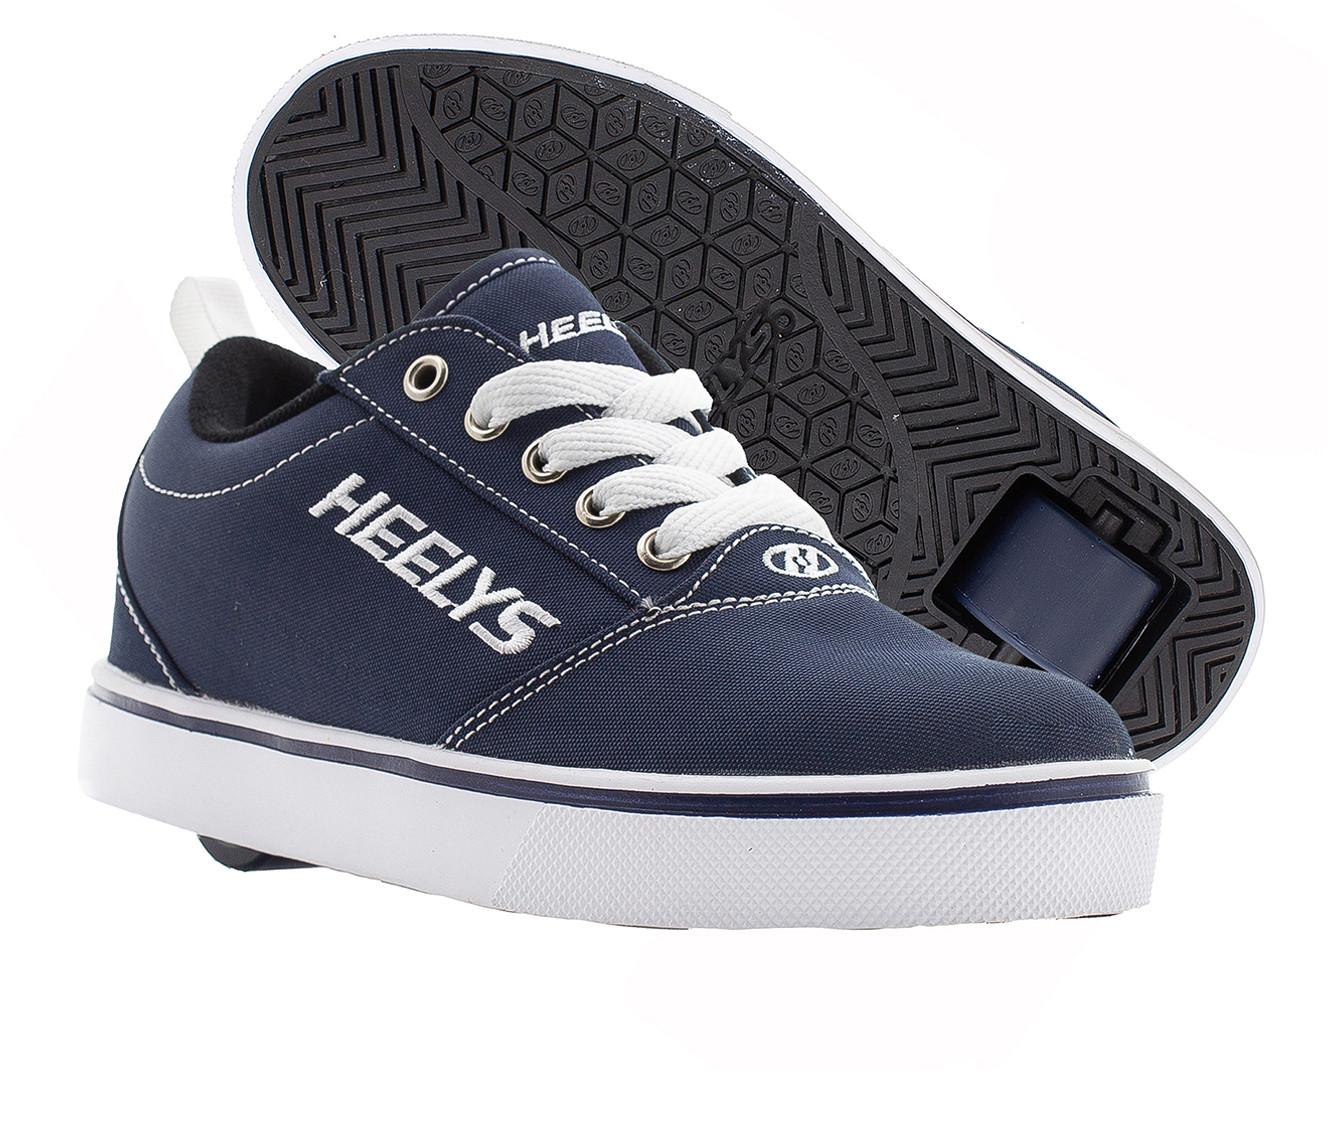 Men's Heelys Pro 20 Skate Shoes